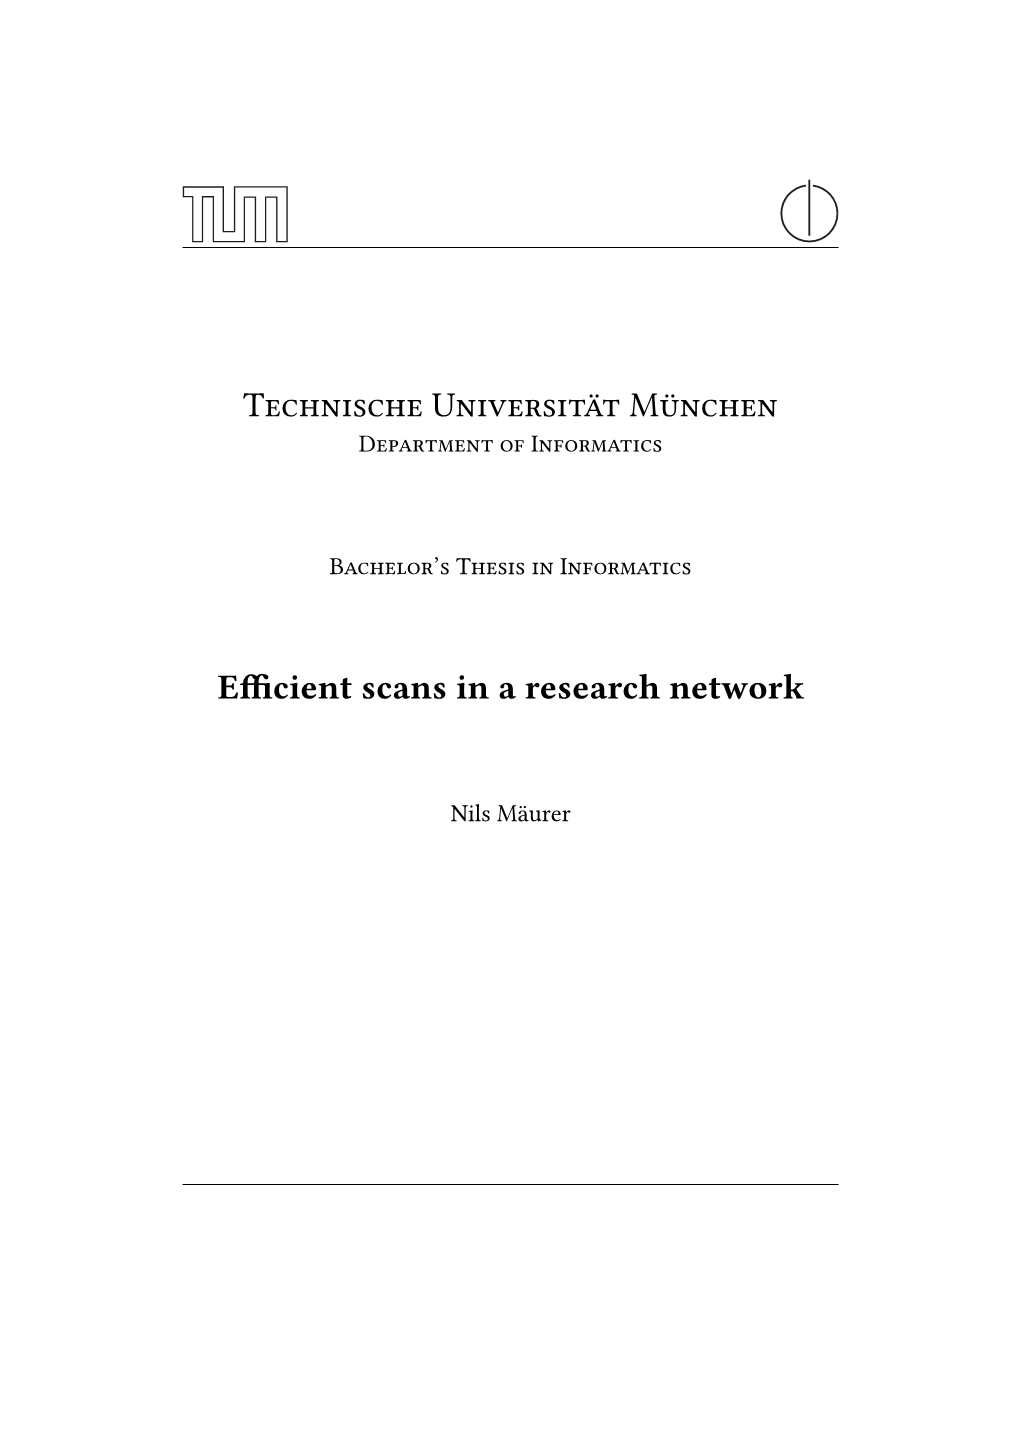 T U M E Cient Scans in a Research Network